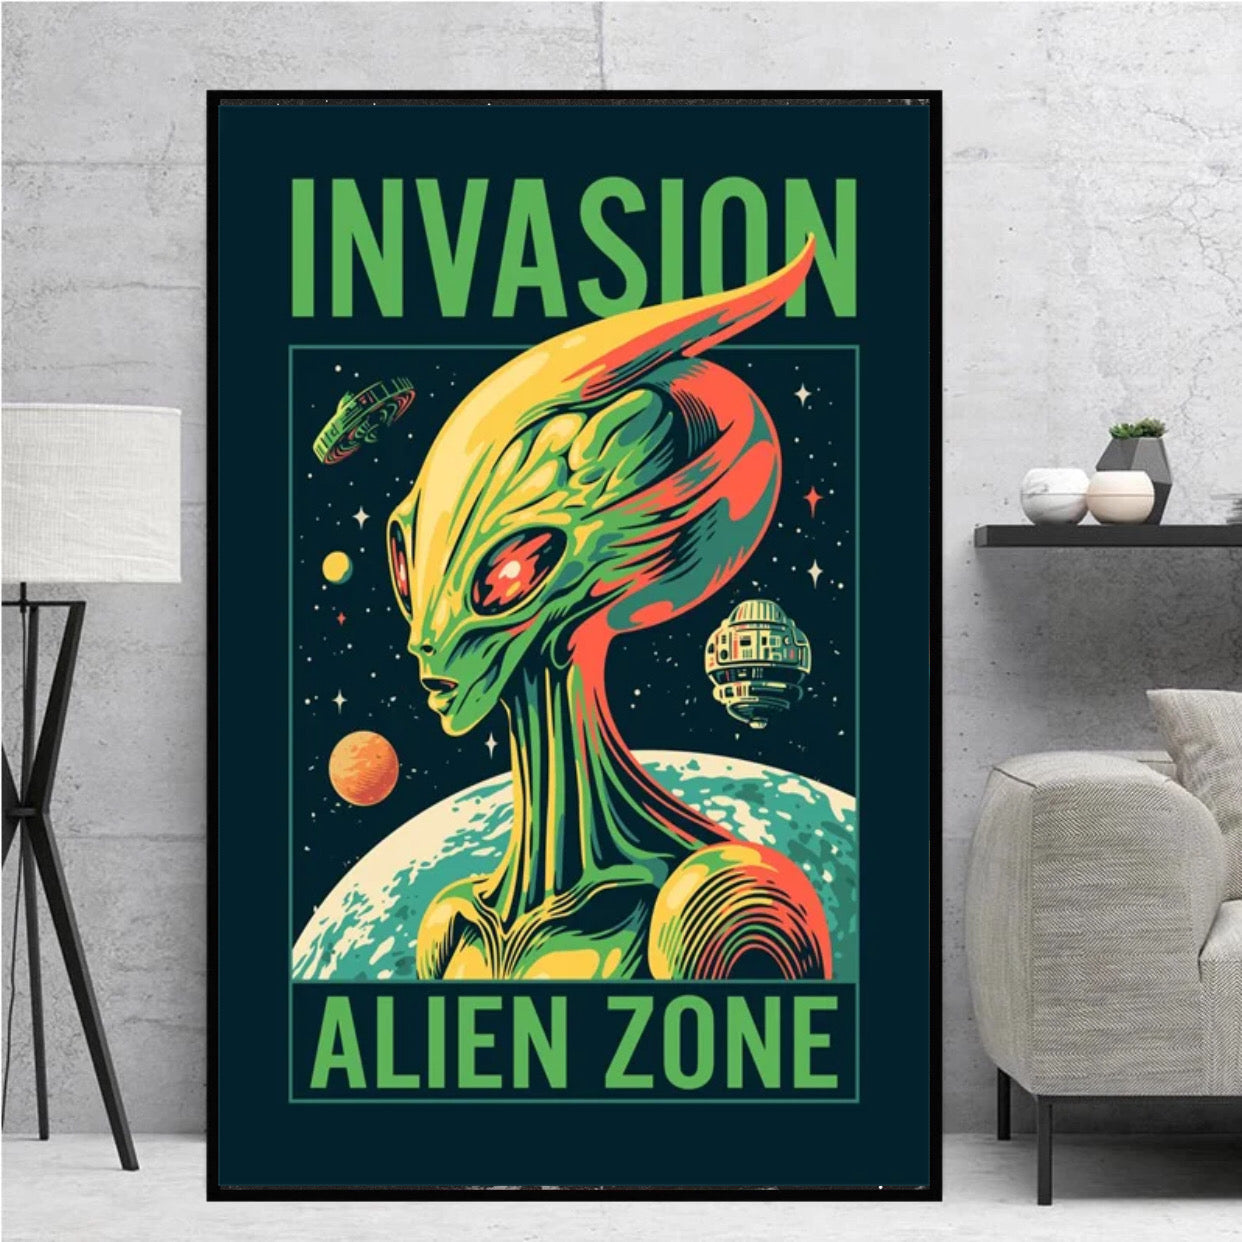 "invasion alien zone" space poster